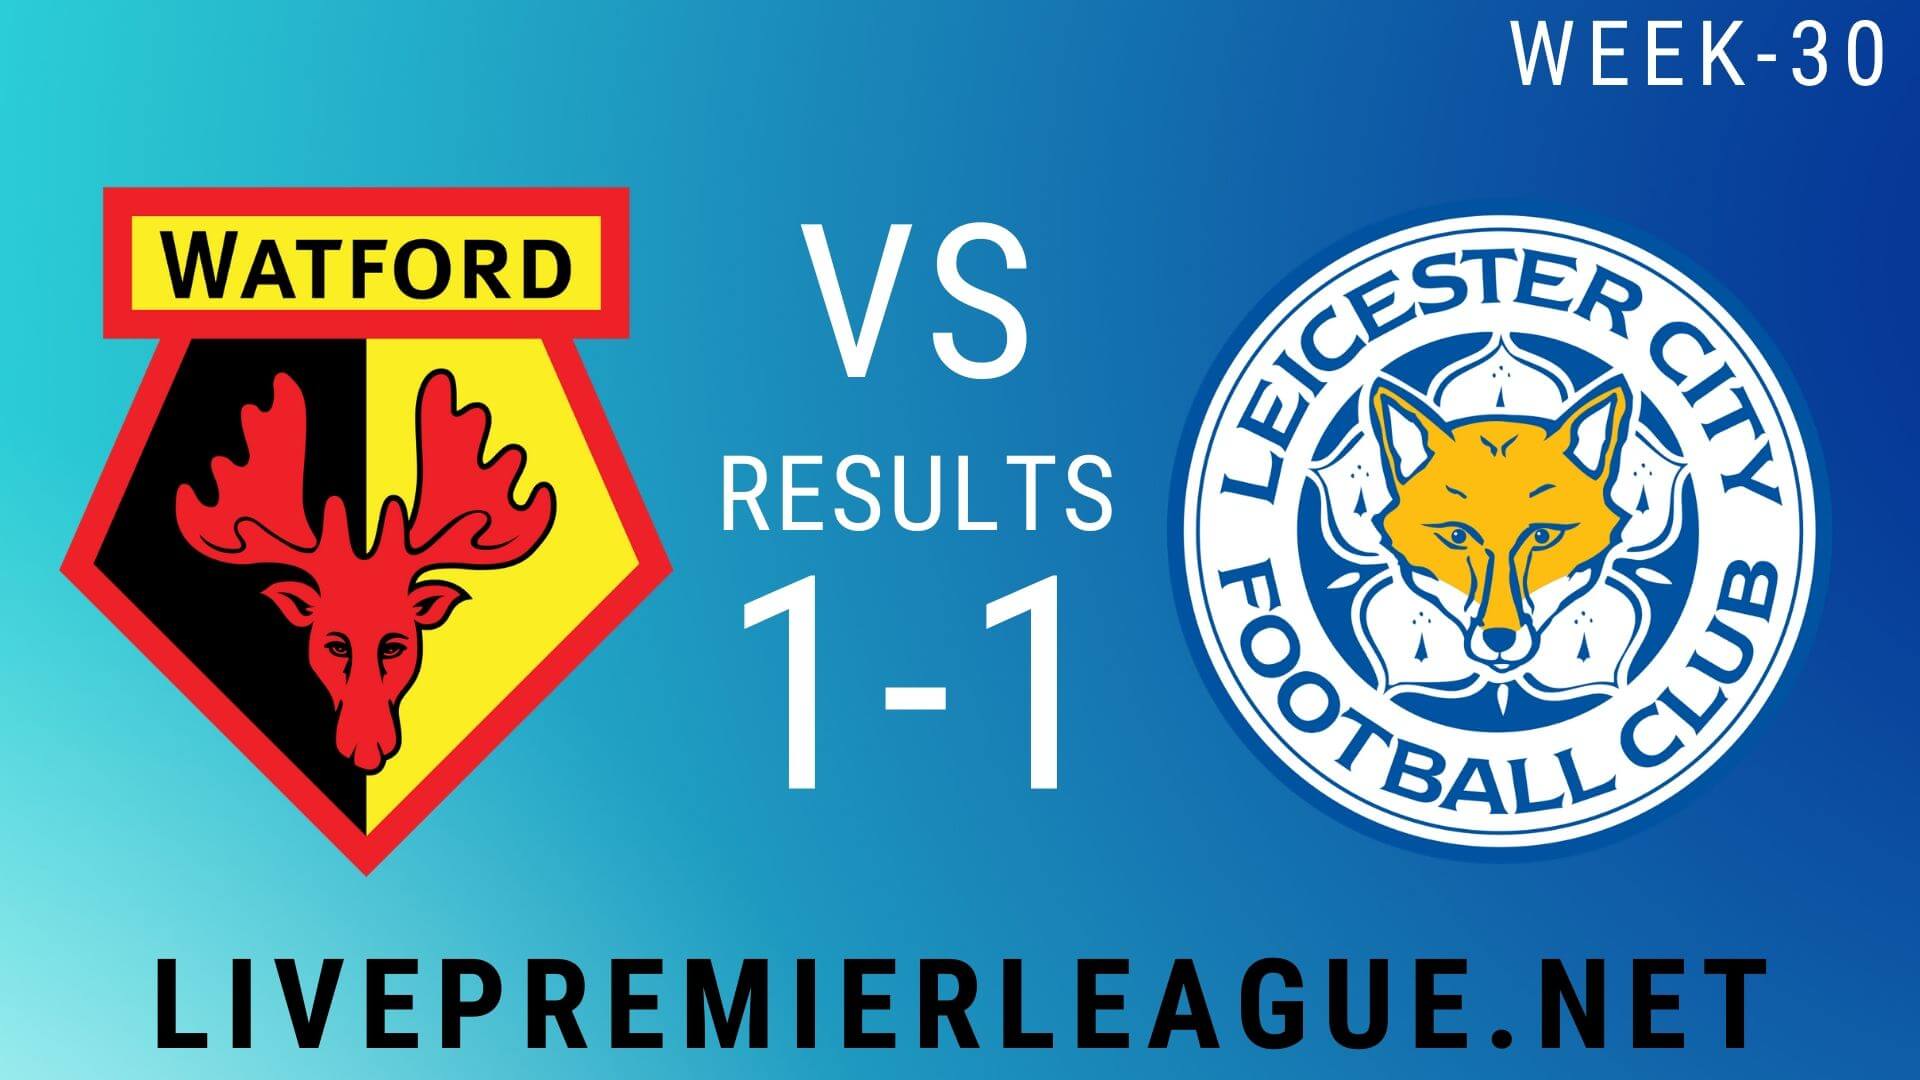 Watford Vs Leicester City | Week 30 Result 2020